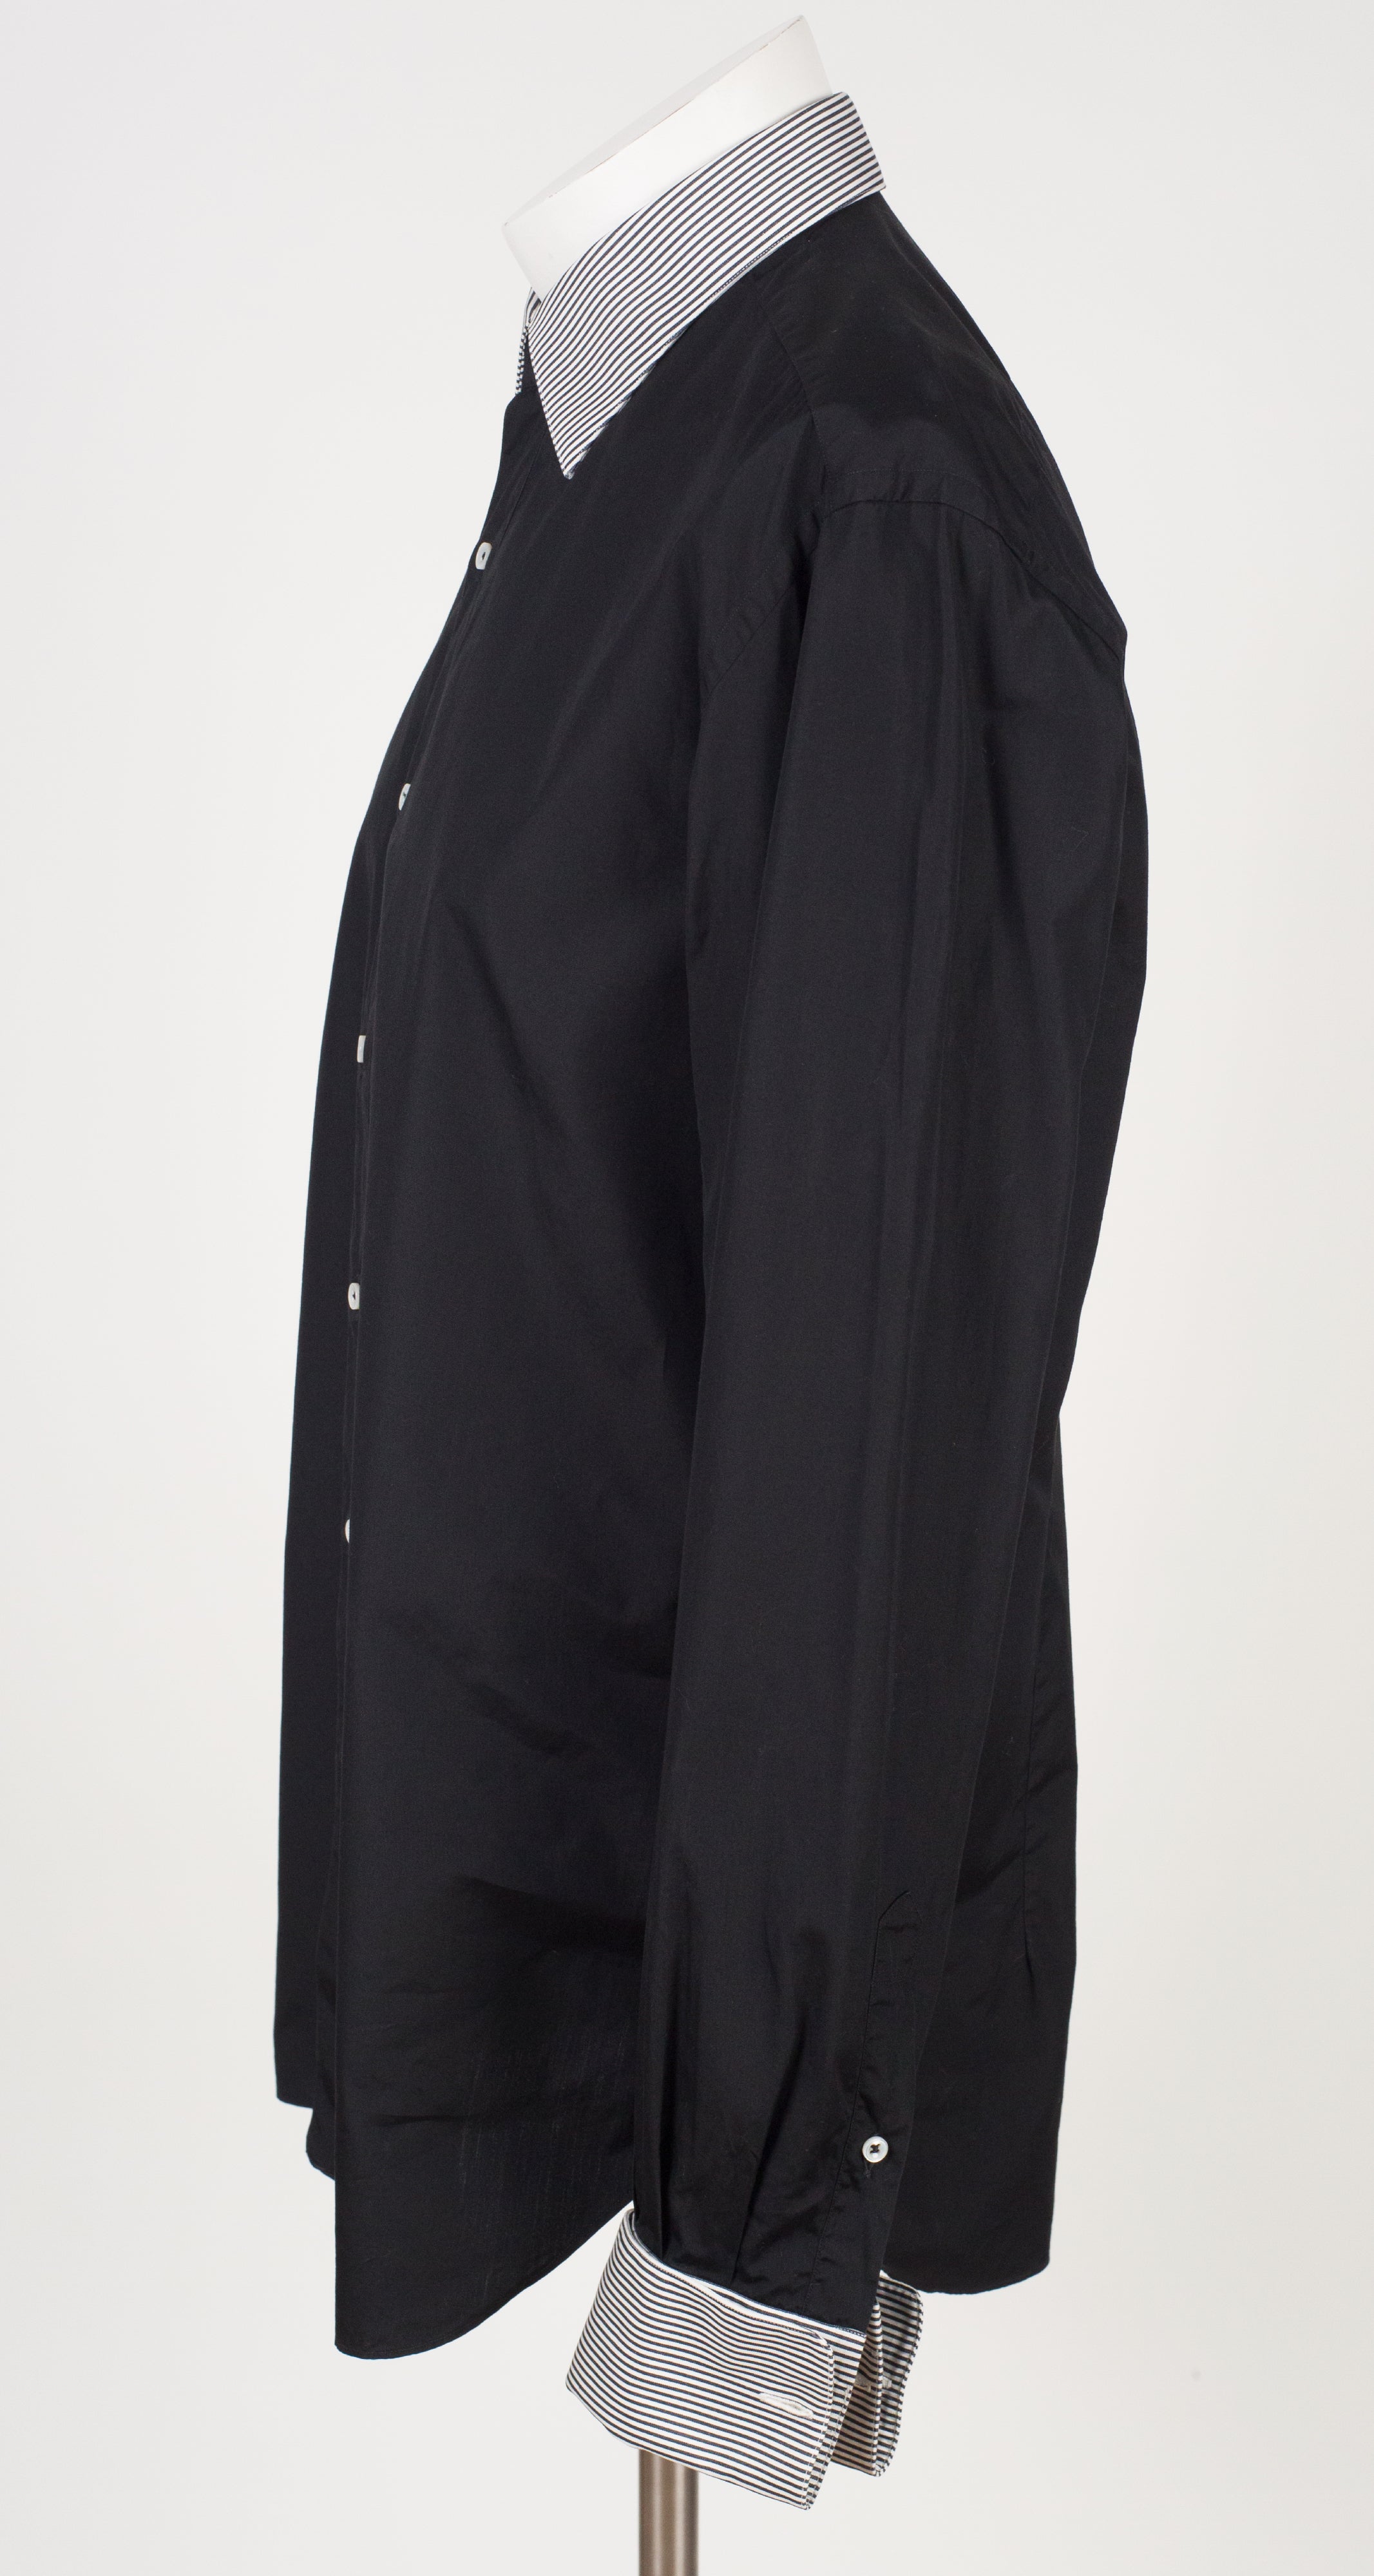 1990s Men's Striped Black & White Cotton French Cuff Dress Shirt